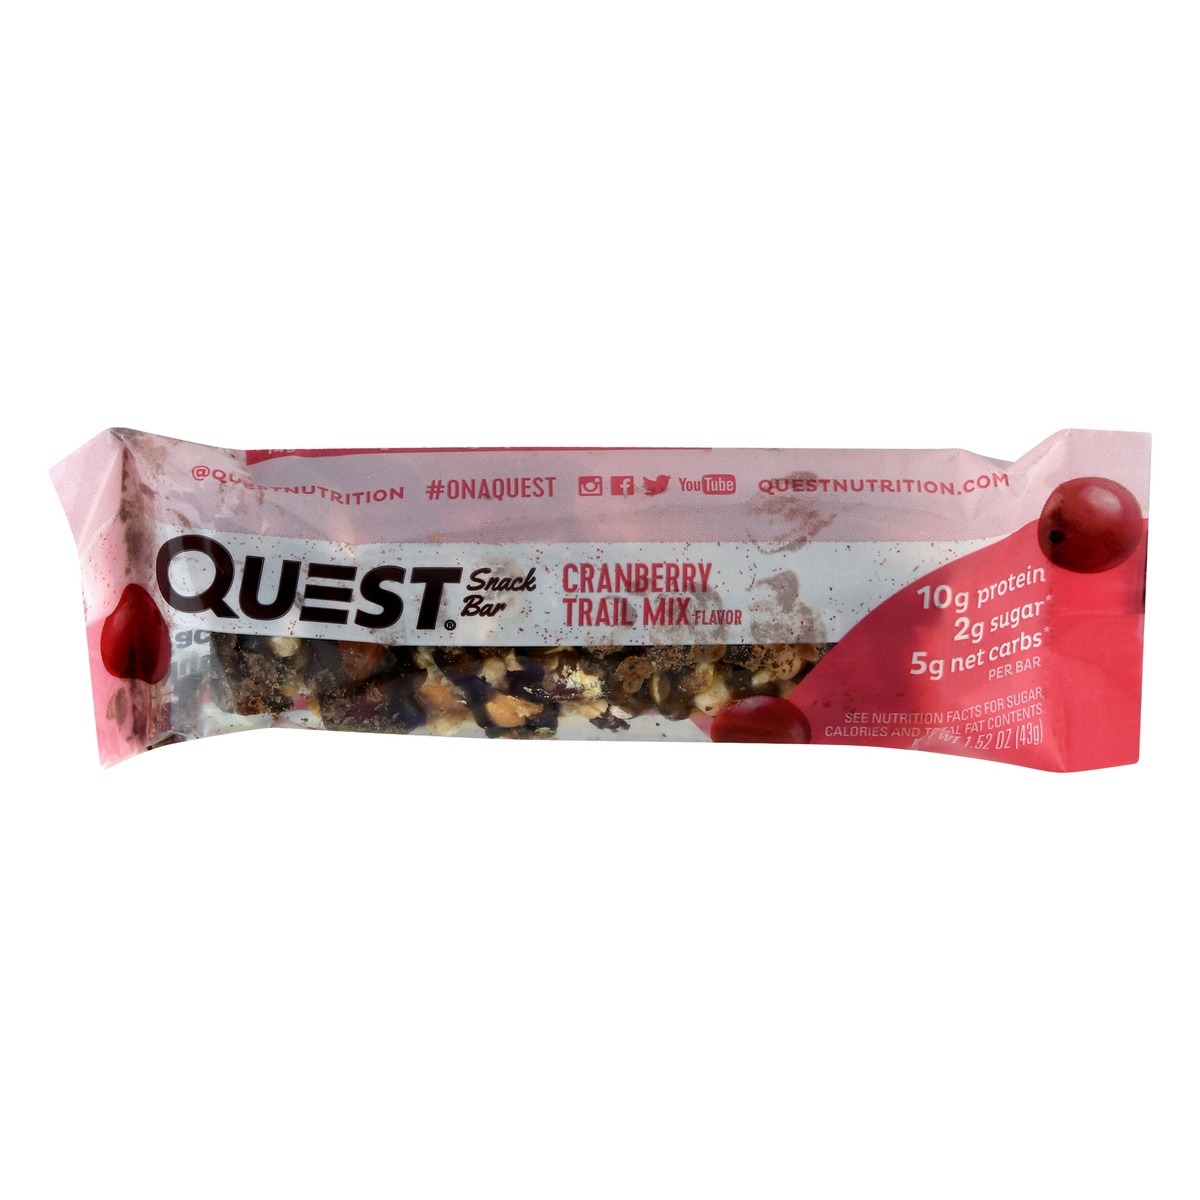 slide 1 of 10, Quest Cranberry Trail Mix Flavor Snack Bar 1.52 oz, 1 ct